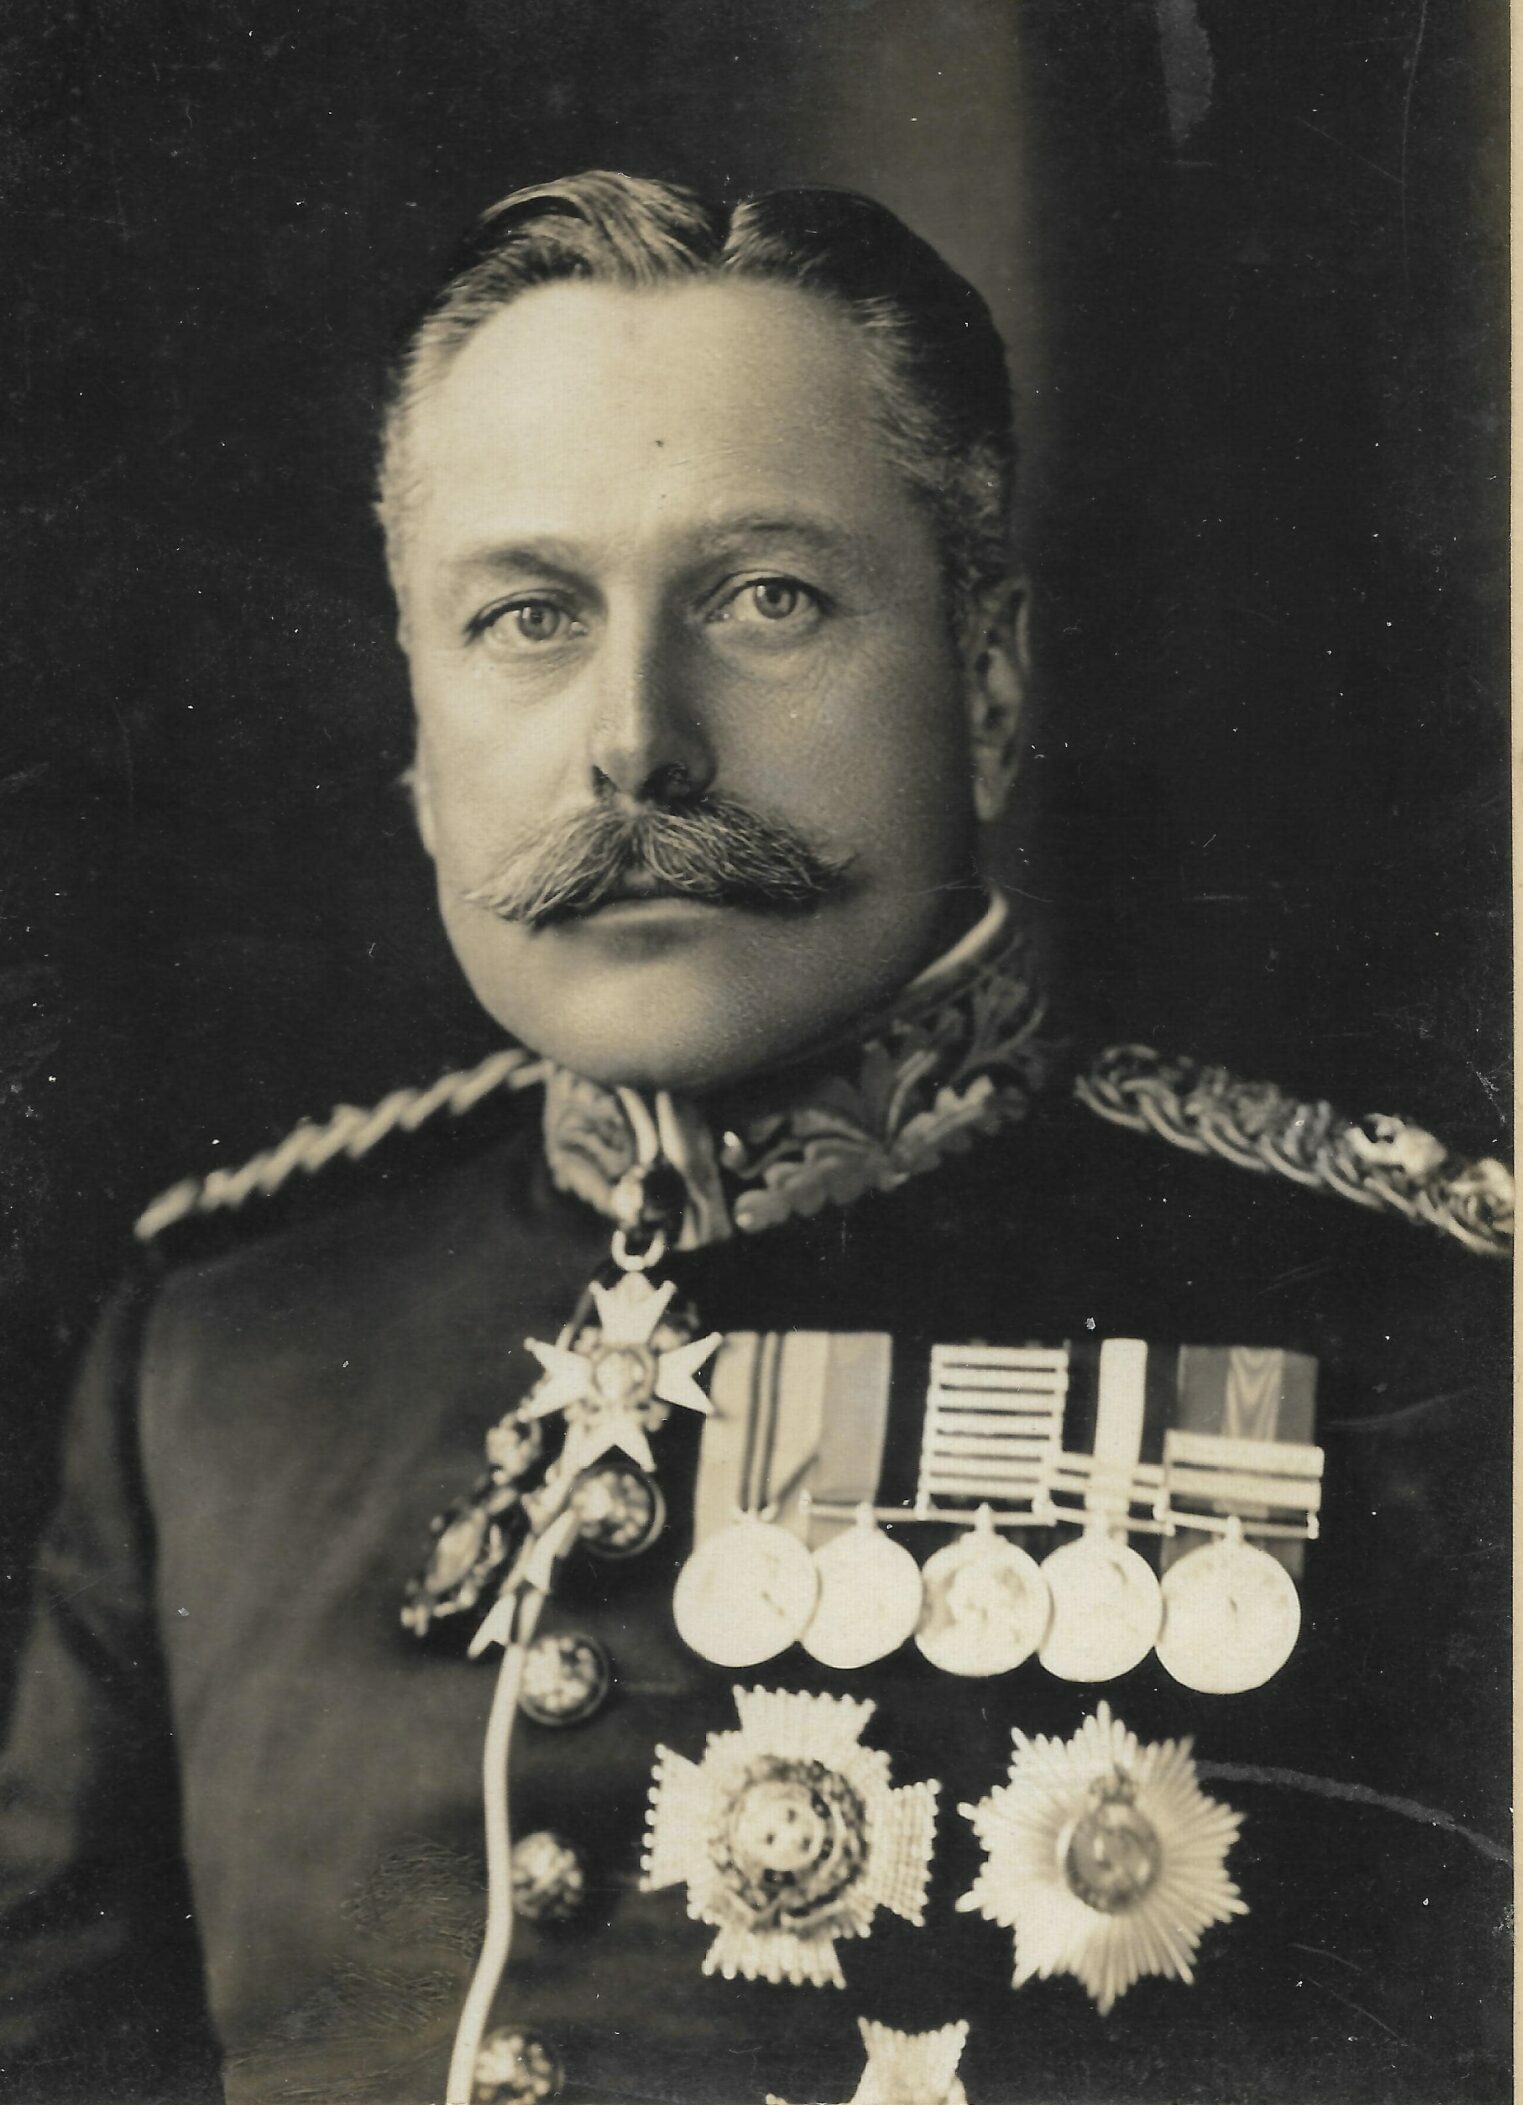 General Douglas Haig